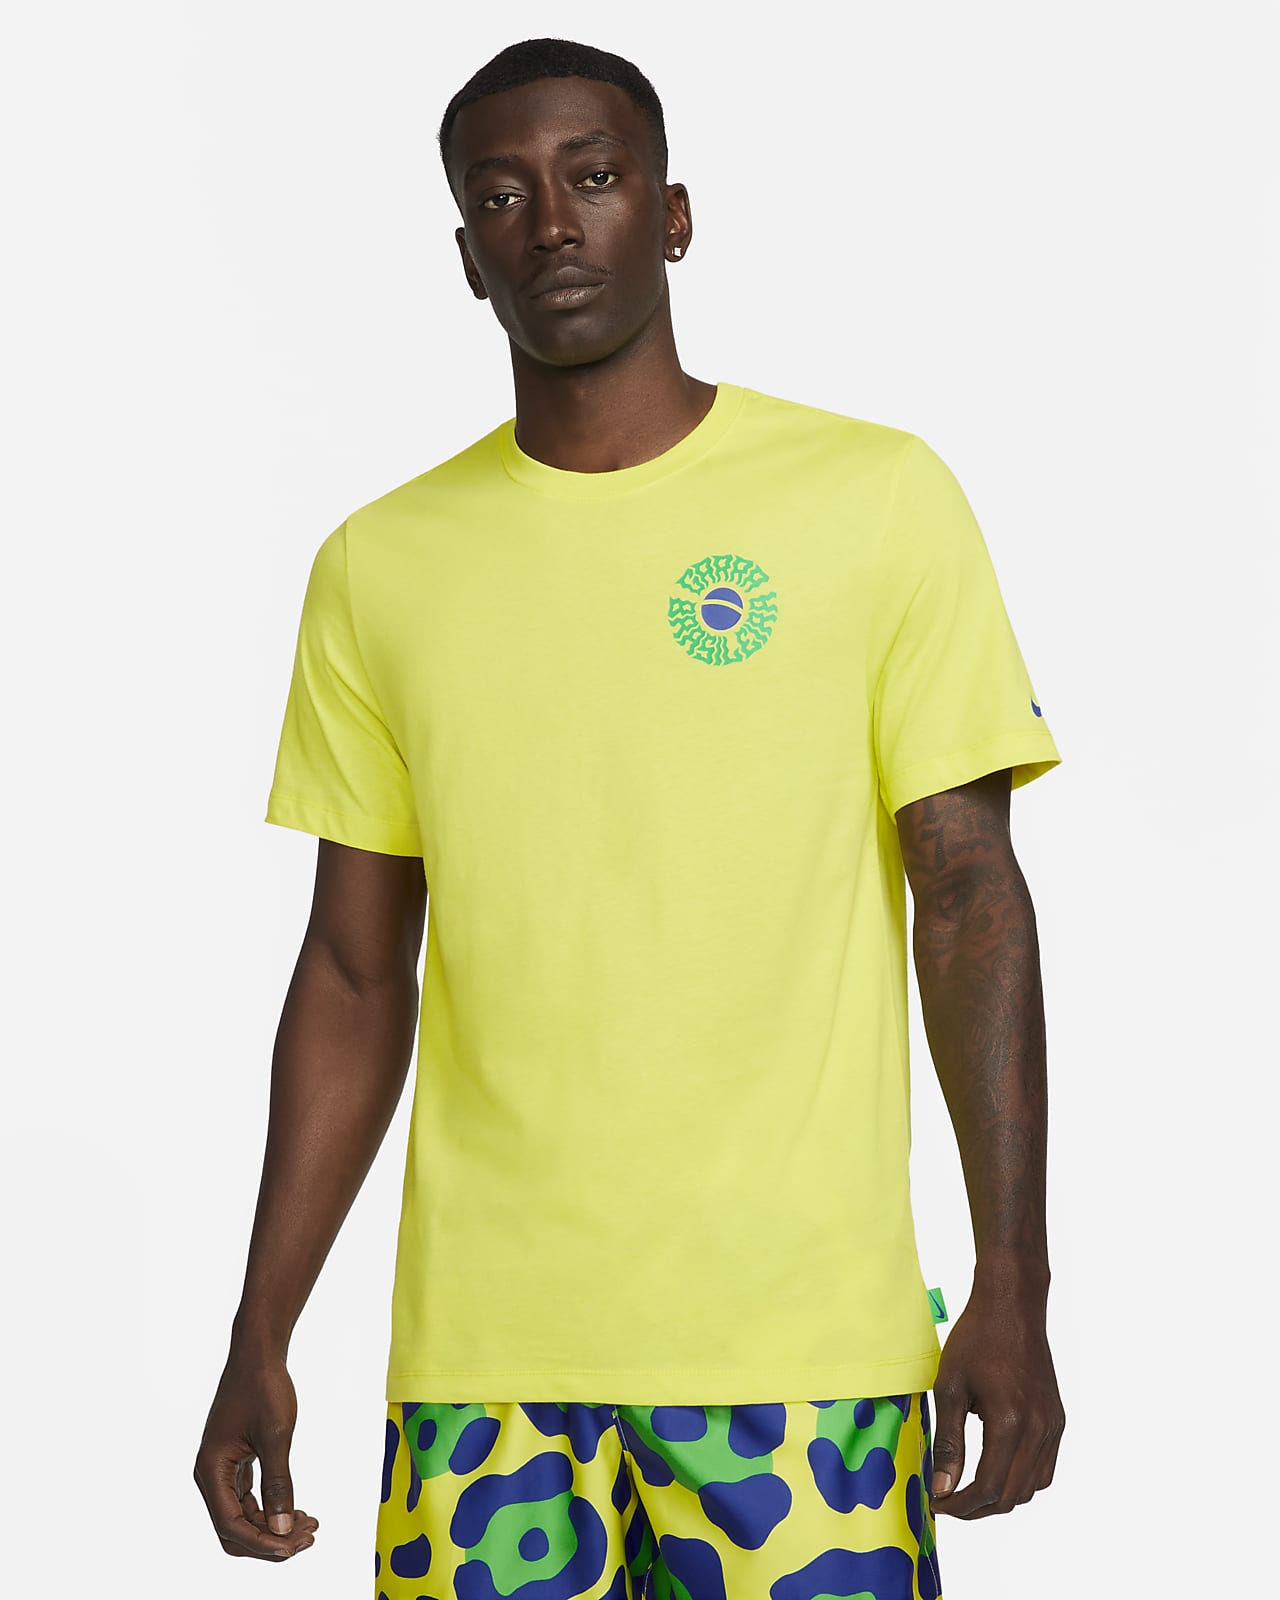 Brazil Men's Nike Voice T-Shirt.